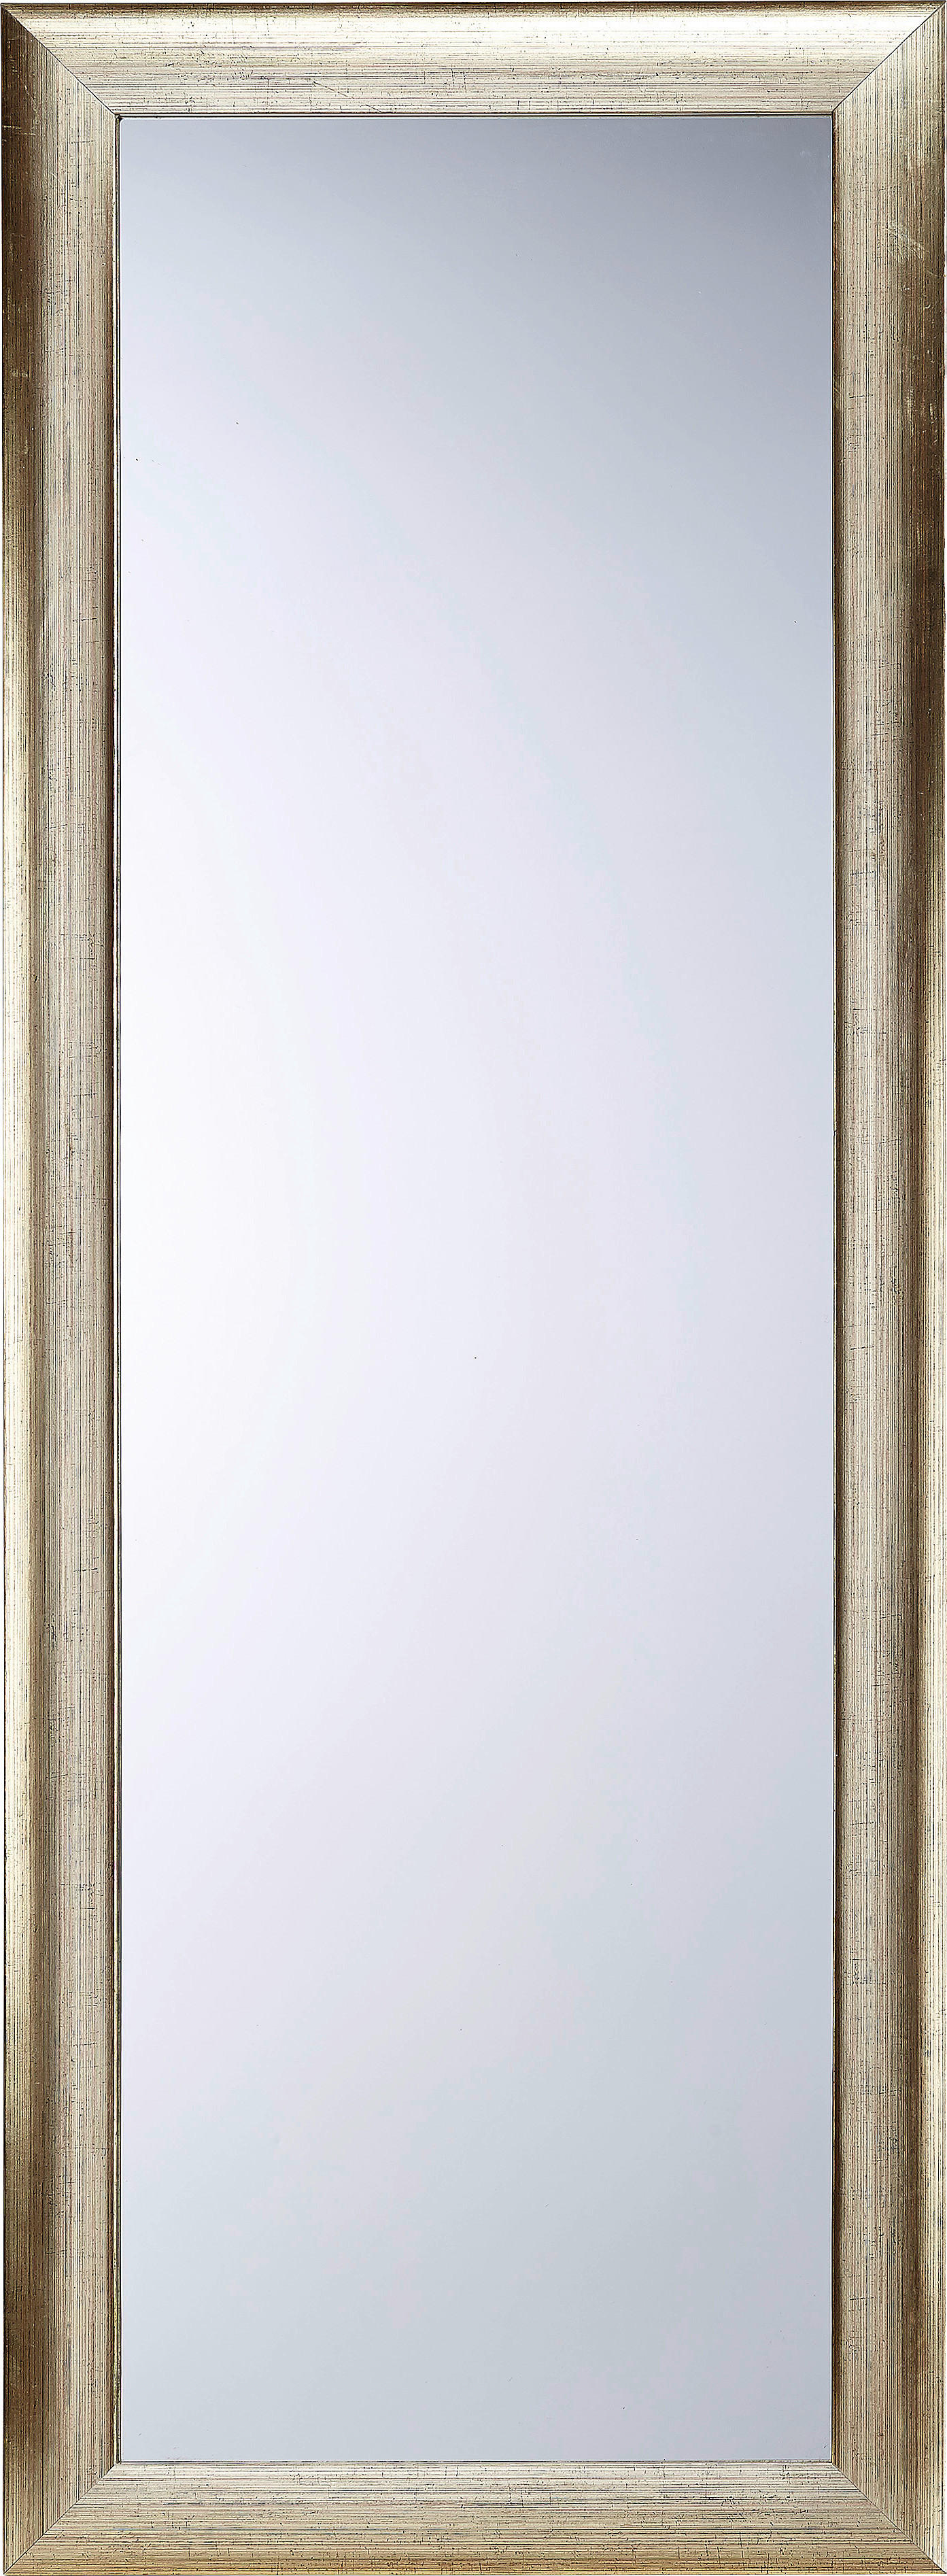 WANDSPIEGEL 65/165/1,80 cm    - Silberfarben/Goldfarben, Lifestyle, Glas/Holz (65/165/1,80cm) - Landscape